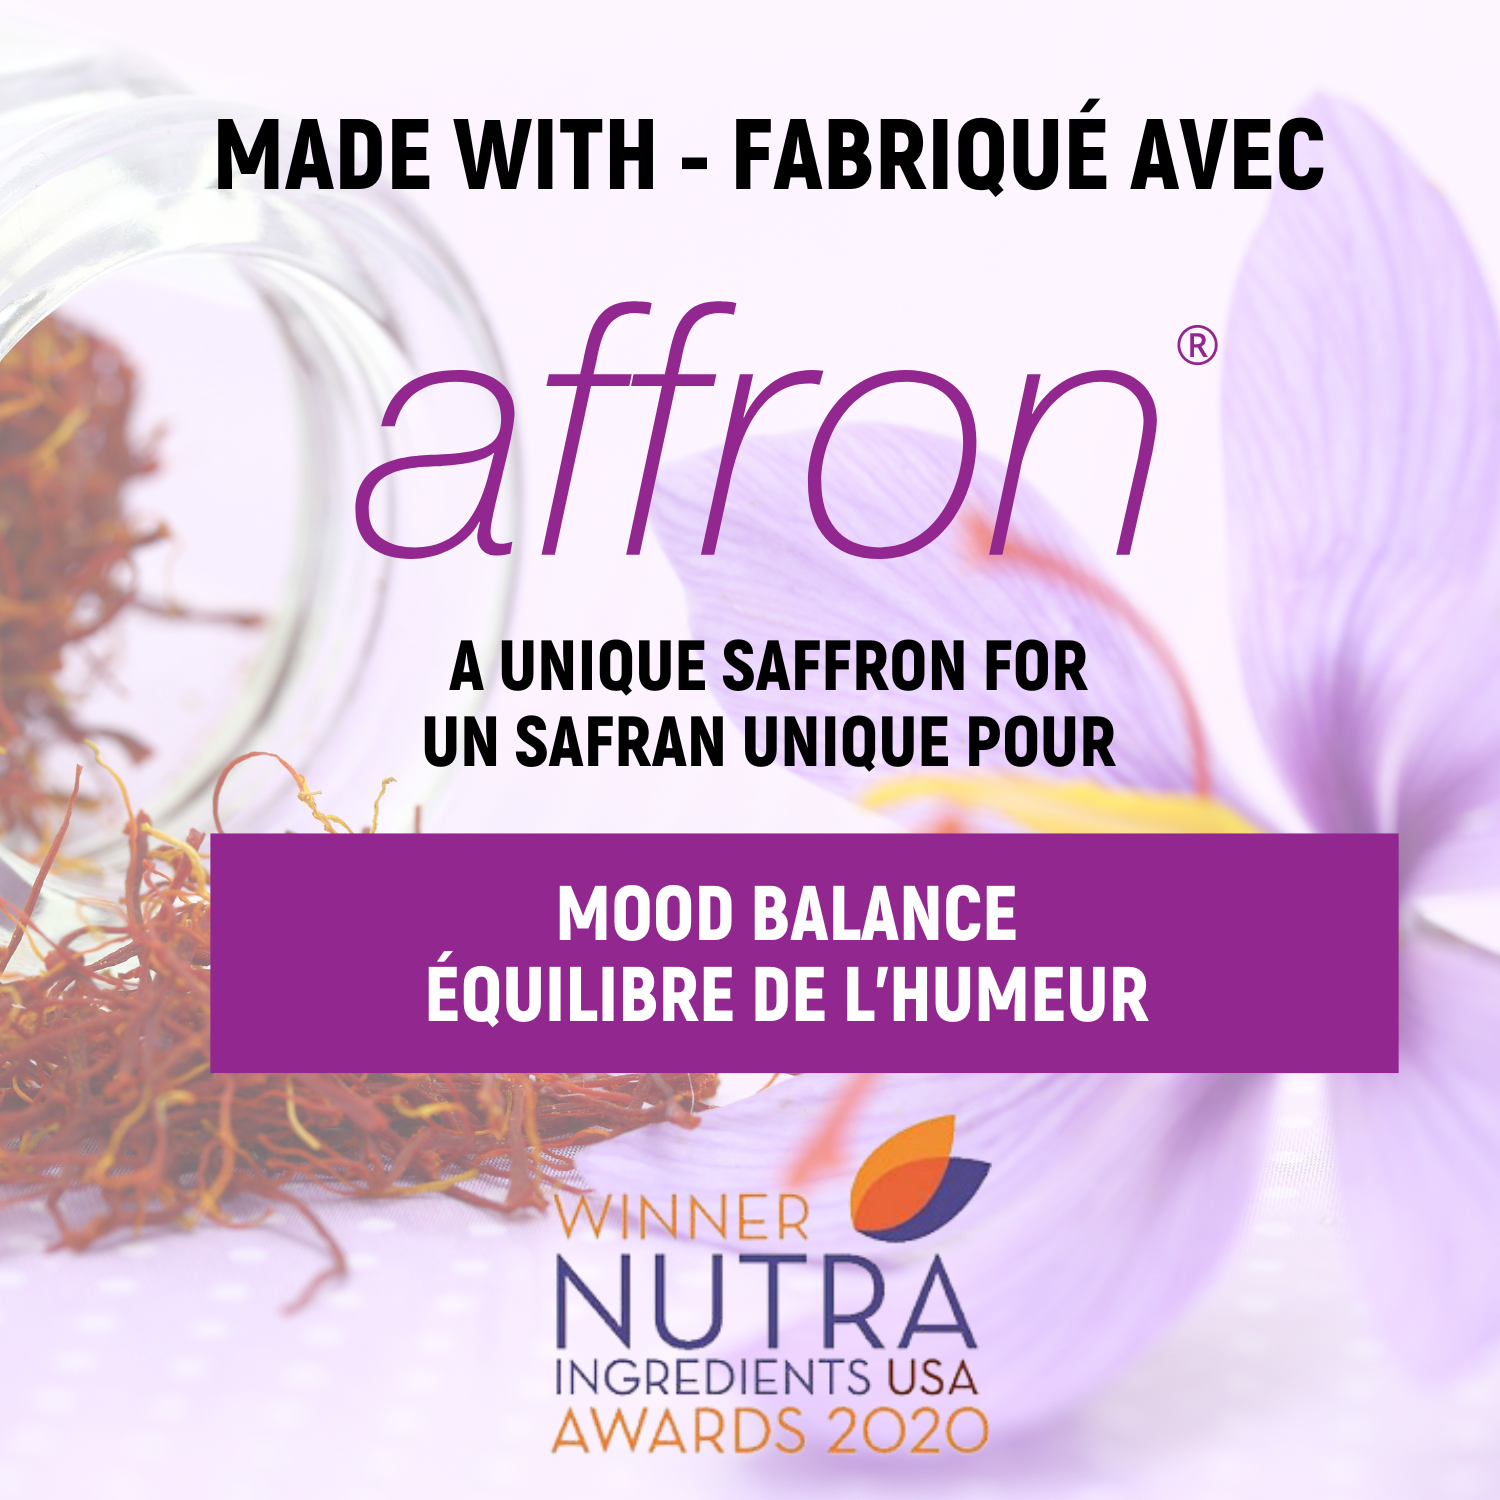 Ultra Premium Garcinia with Saffron